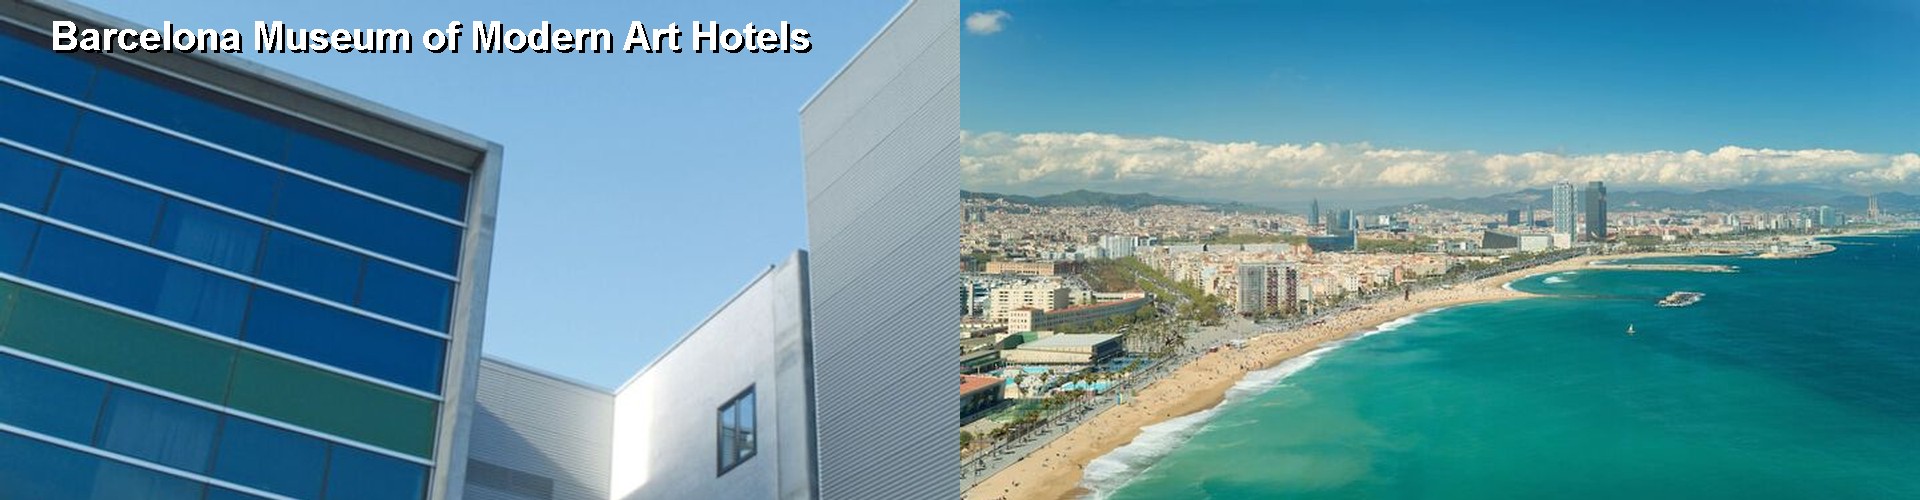 5 Best Hotels near Barcelona Museum of Modern Art